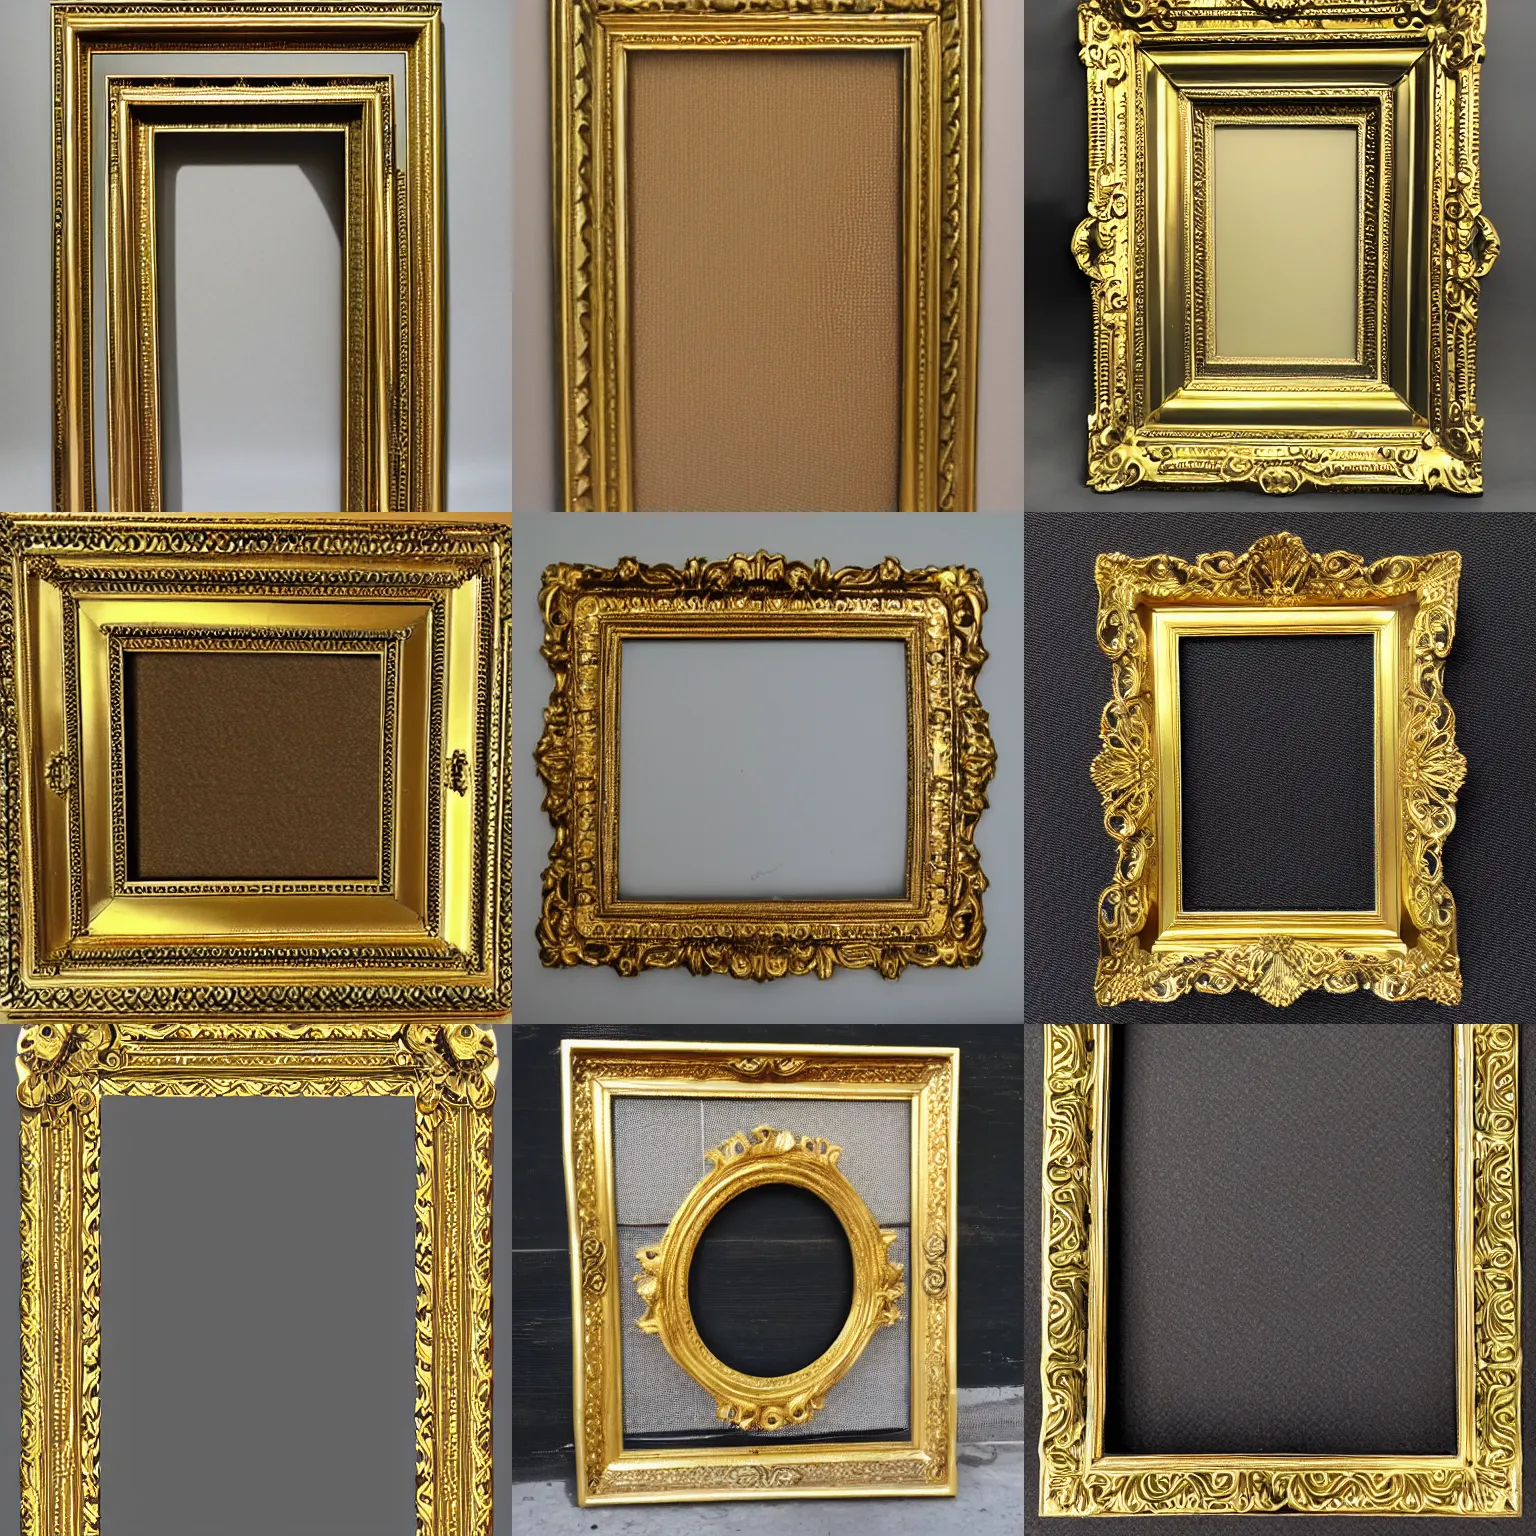 Prompt: symmetrical ornate gold frame